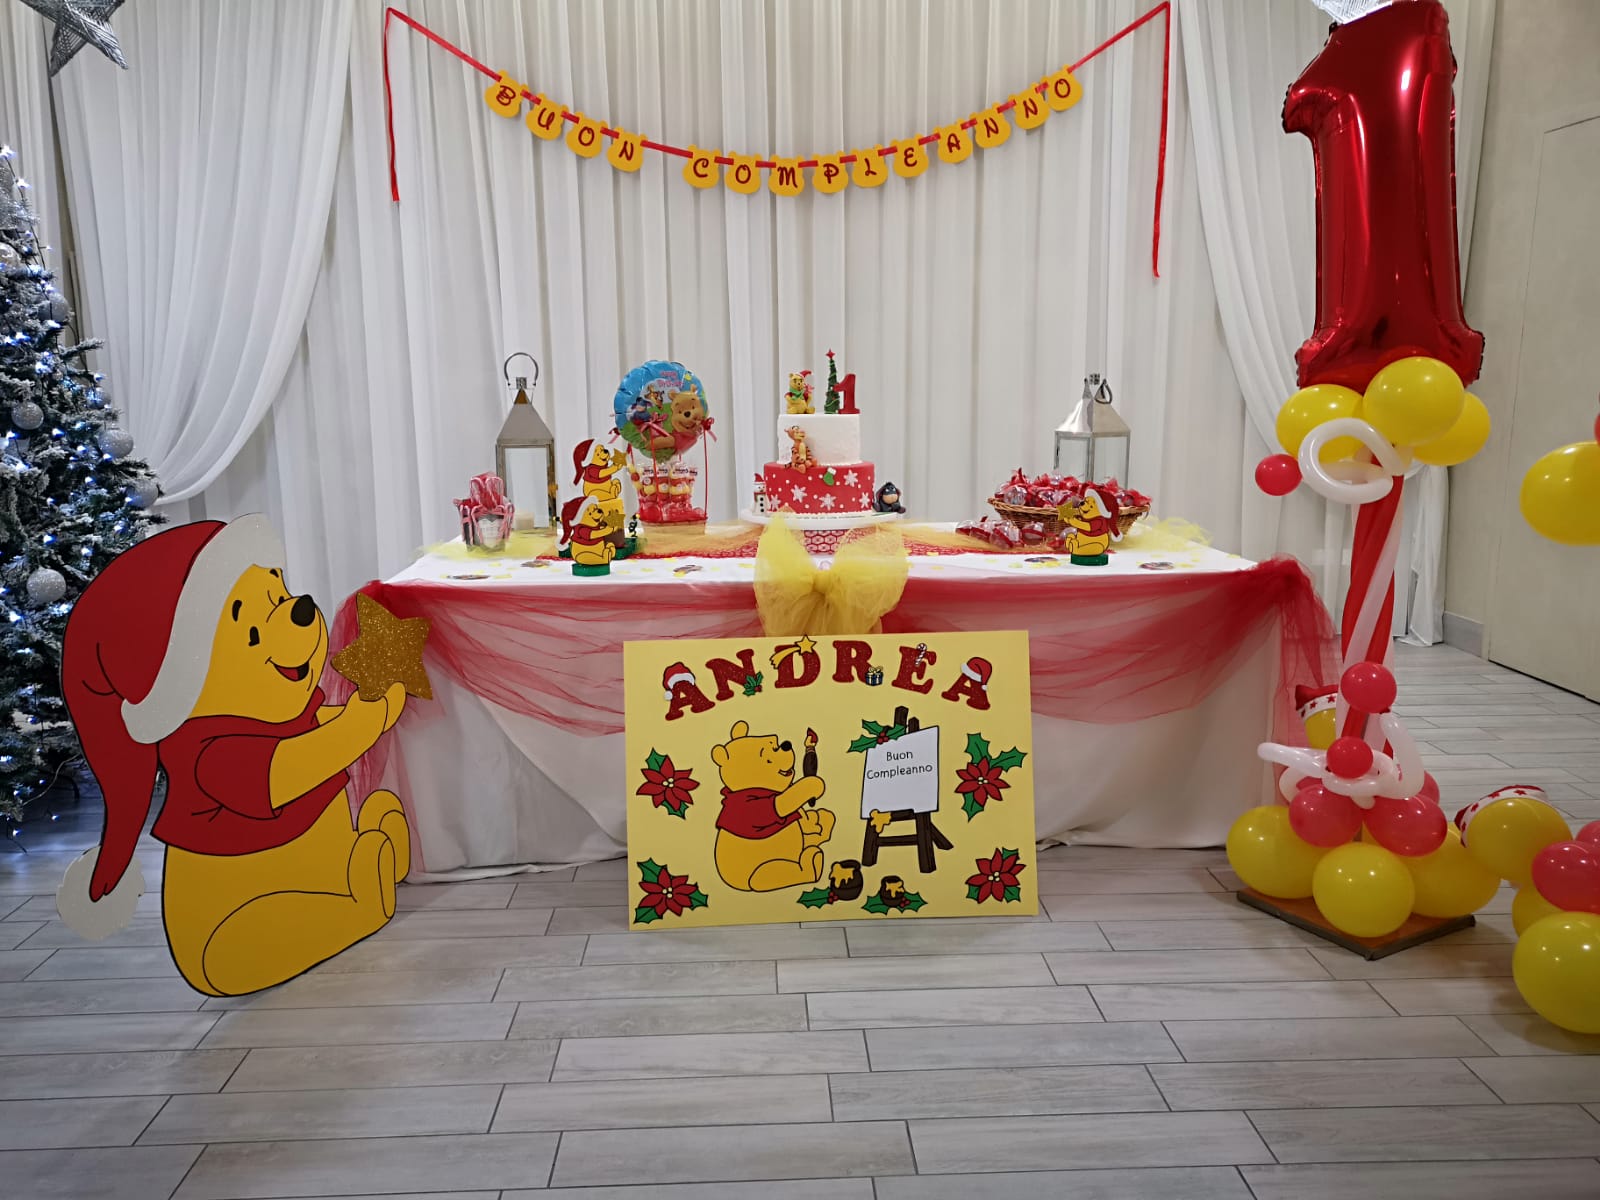 Immagini Natalizie Winnie The Pooh.Cartoncini Animati Winnie The Pooh Natalizio